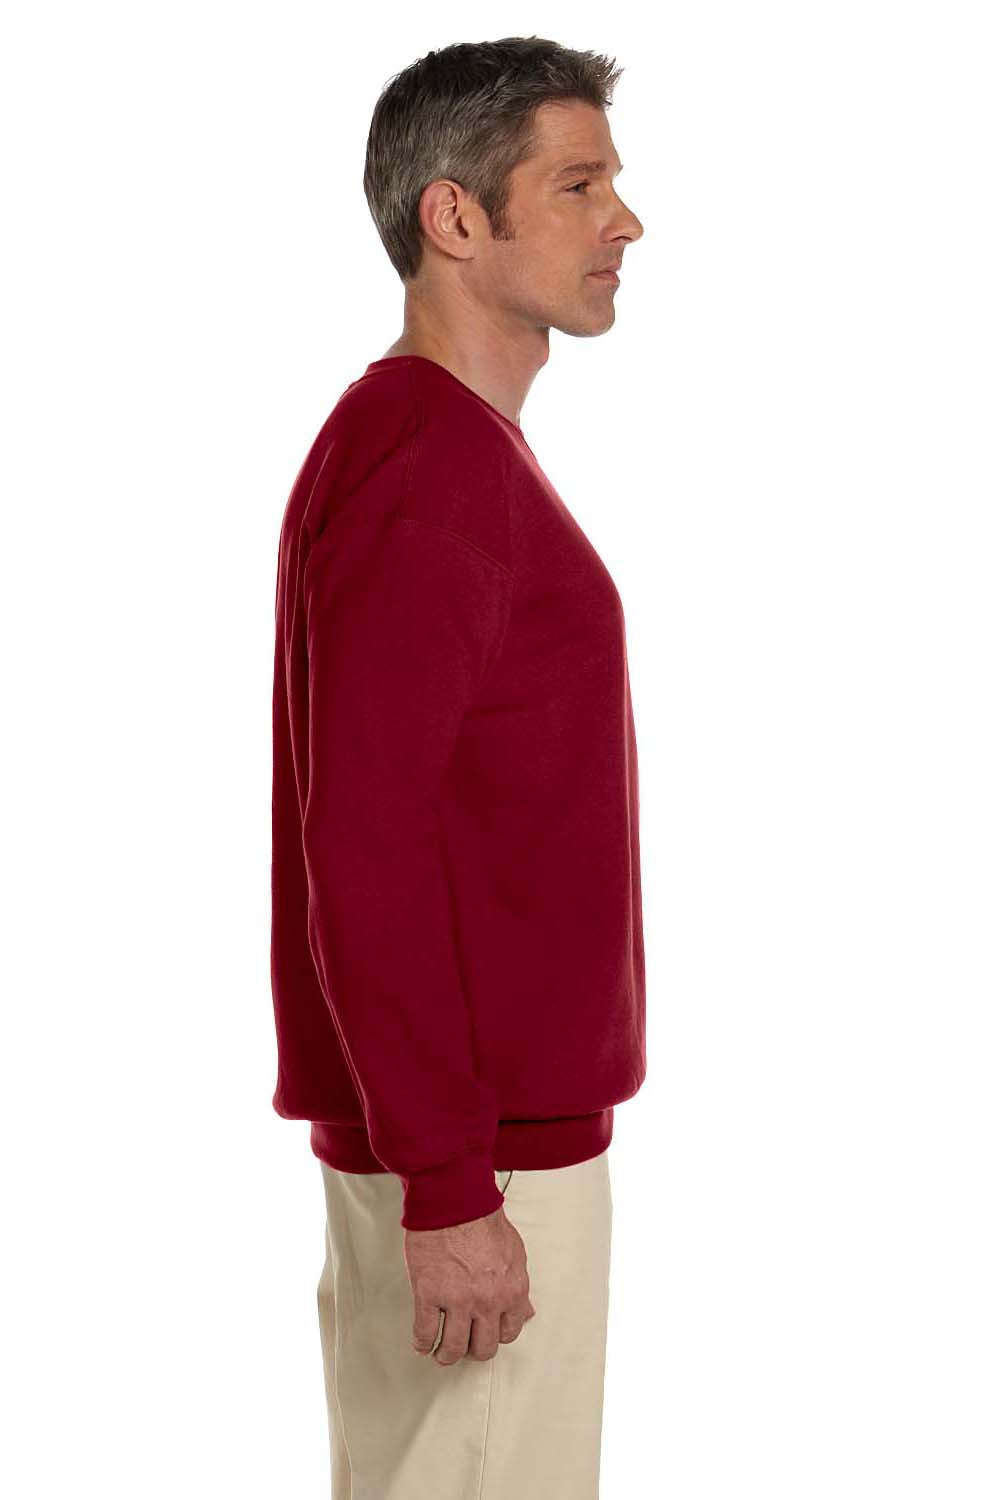 Gildan G180 Mens Fleece Crewneck Sweatshirt Garnet Red Side